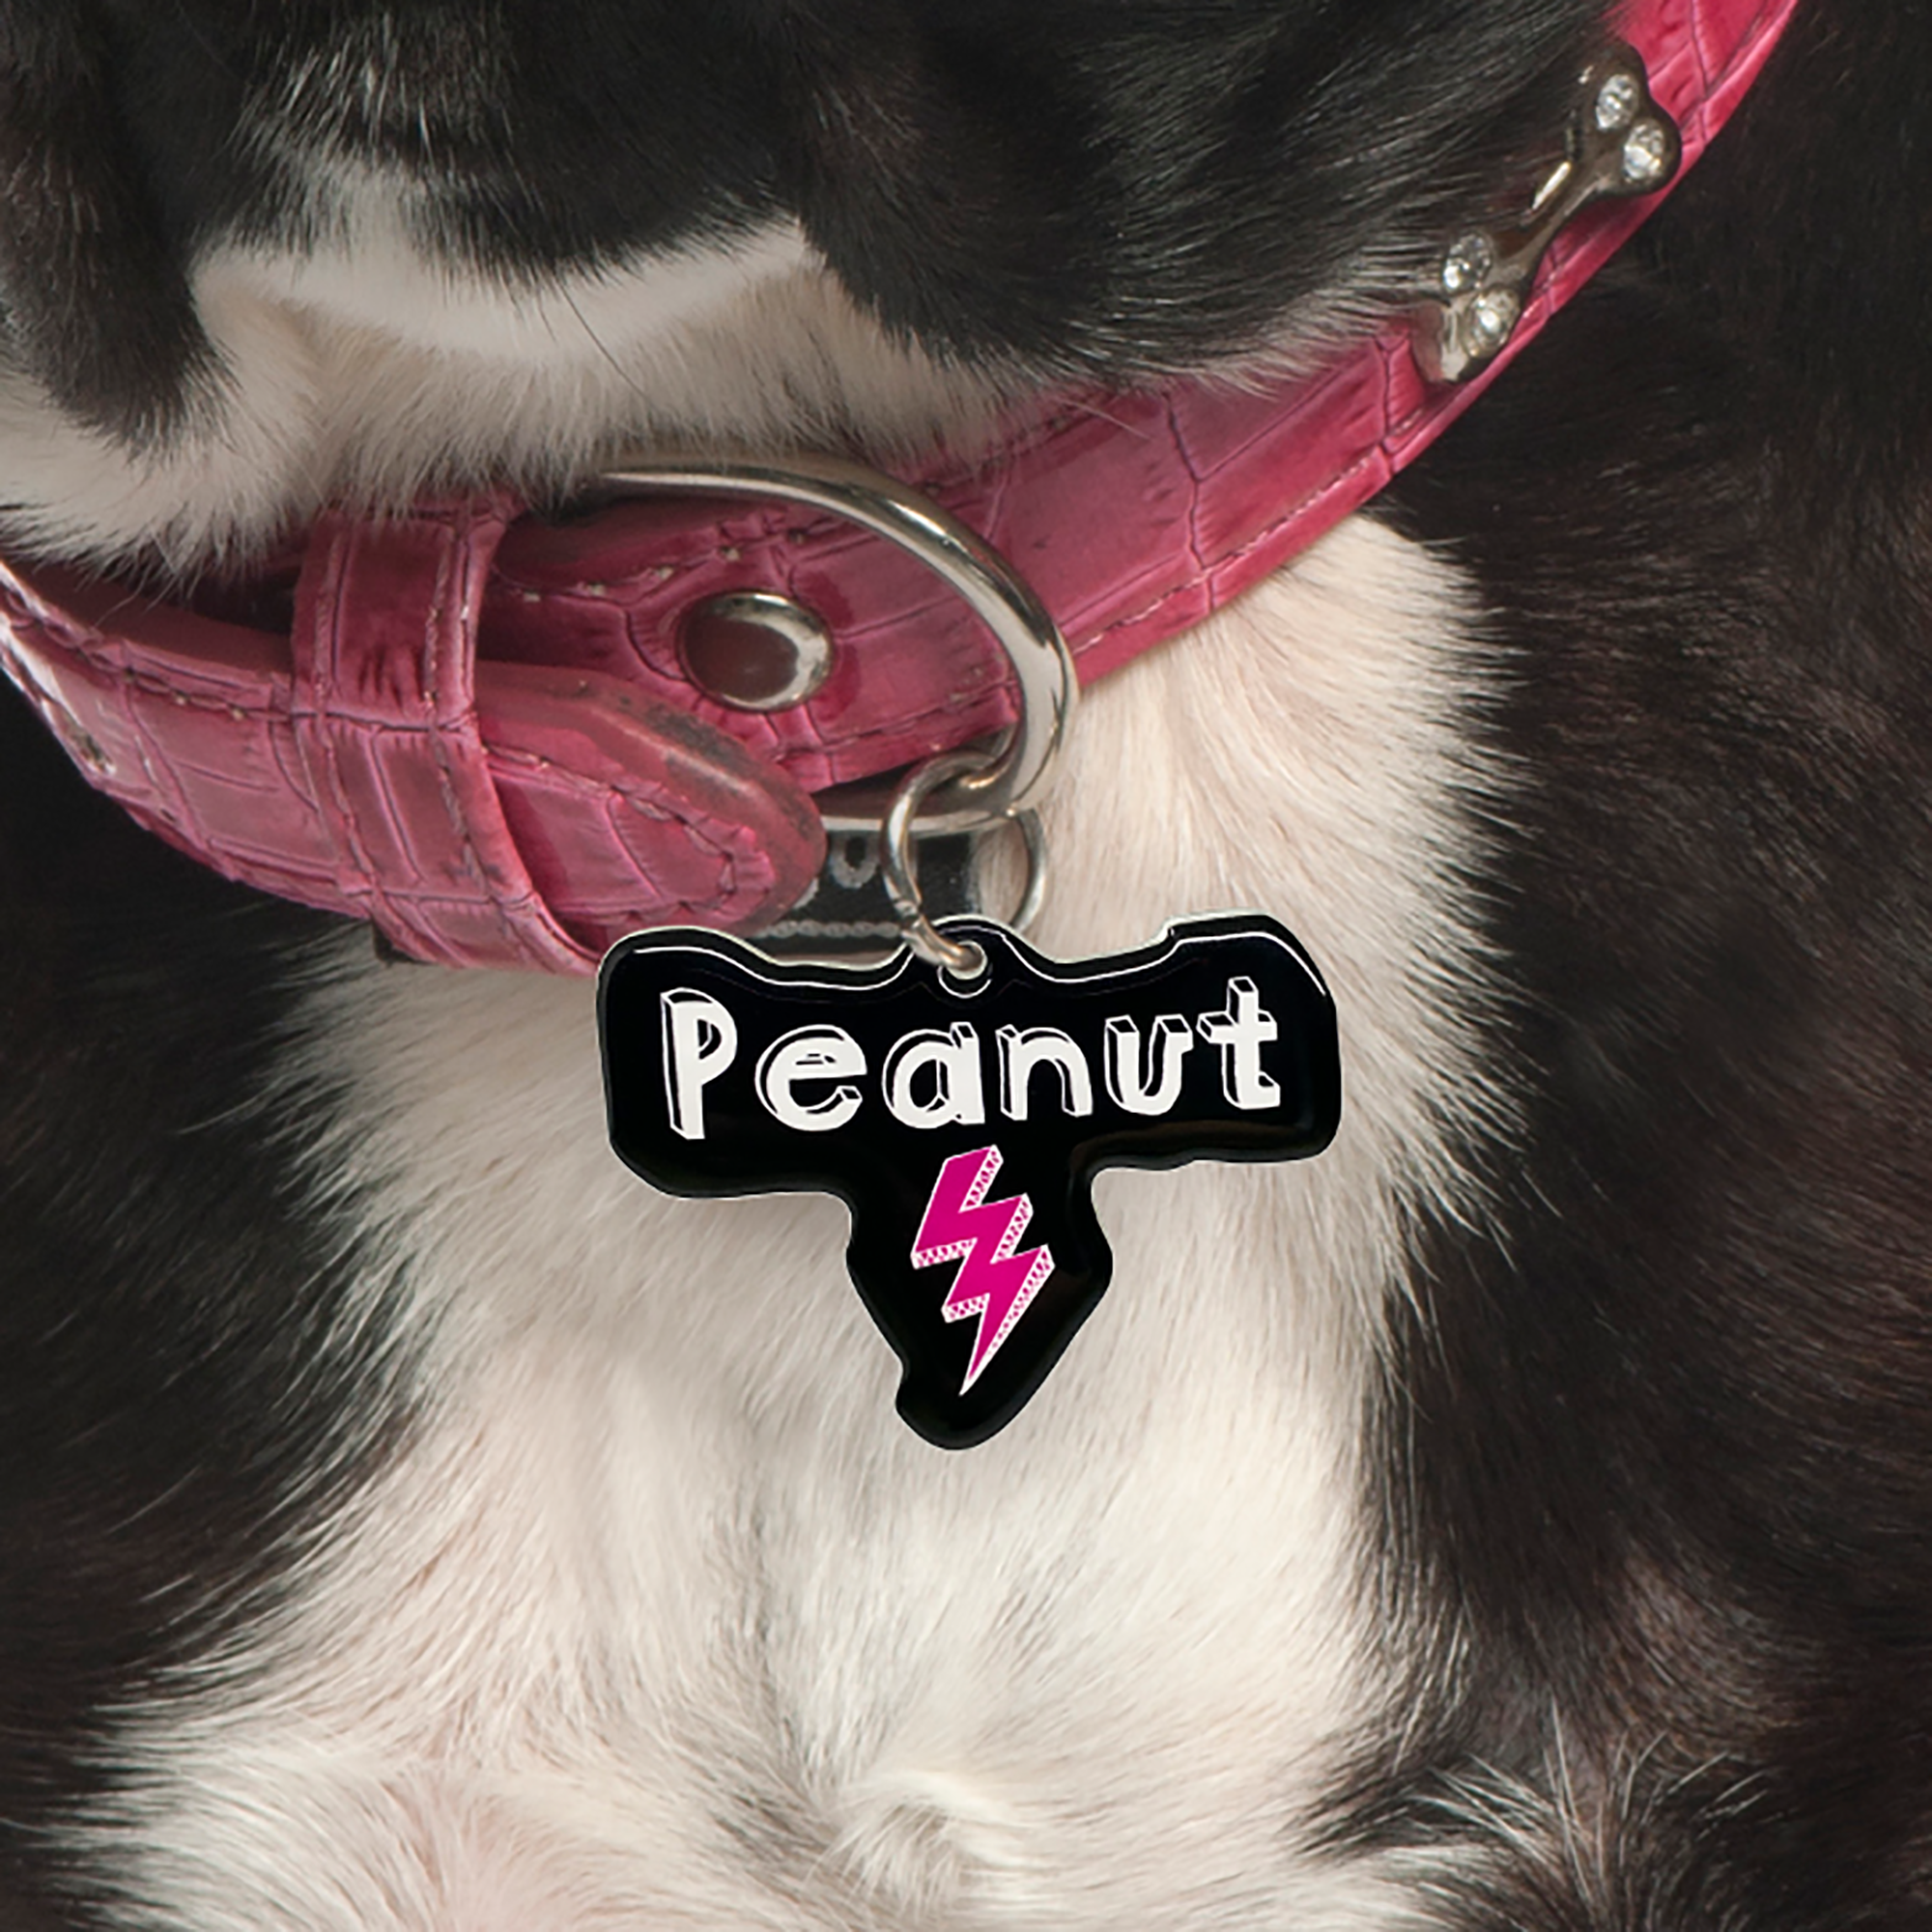 Black + Vivid Pink Lightning Bolt - 2x Tags Dog Name Tags by Bashtags